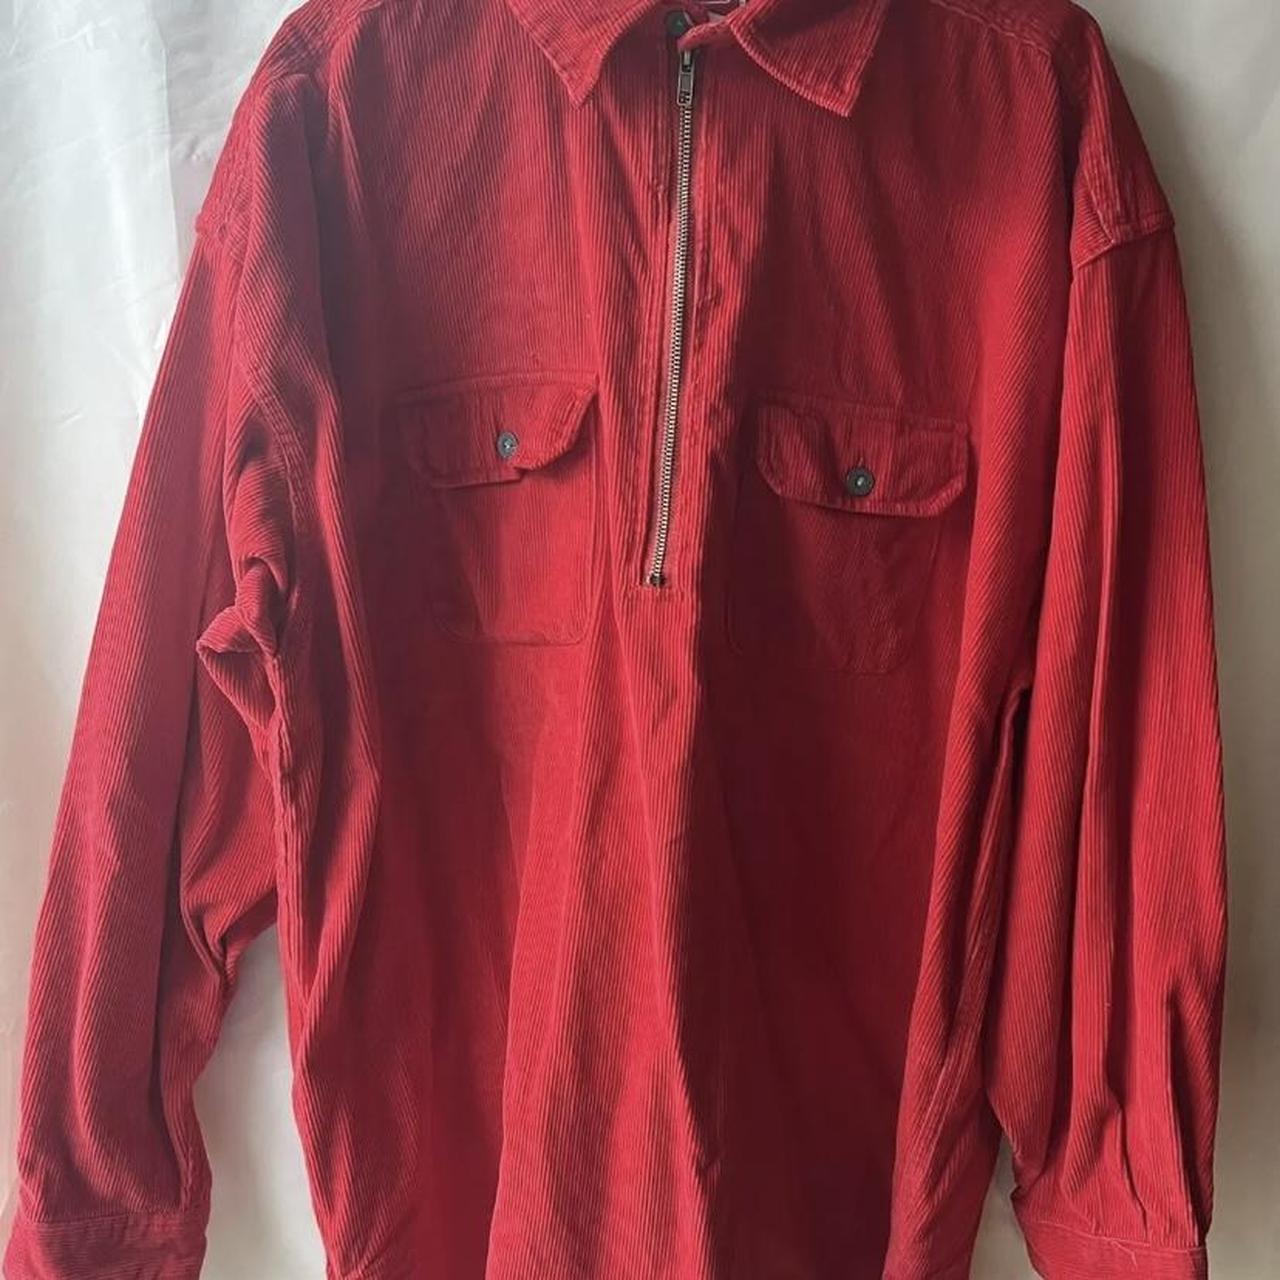 Marlboro vintage red jacket chore 90s smoking work... - Depop